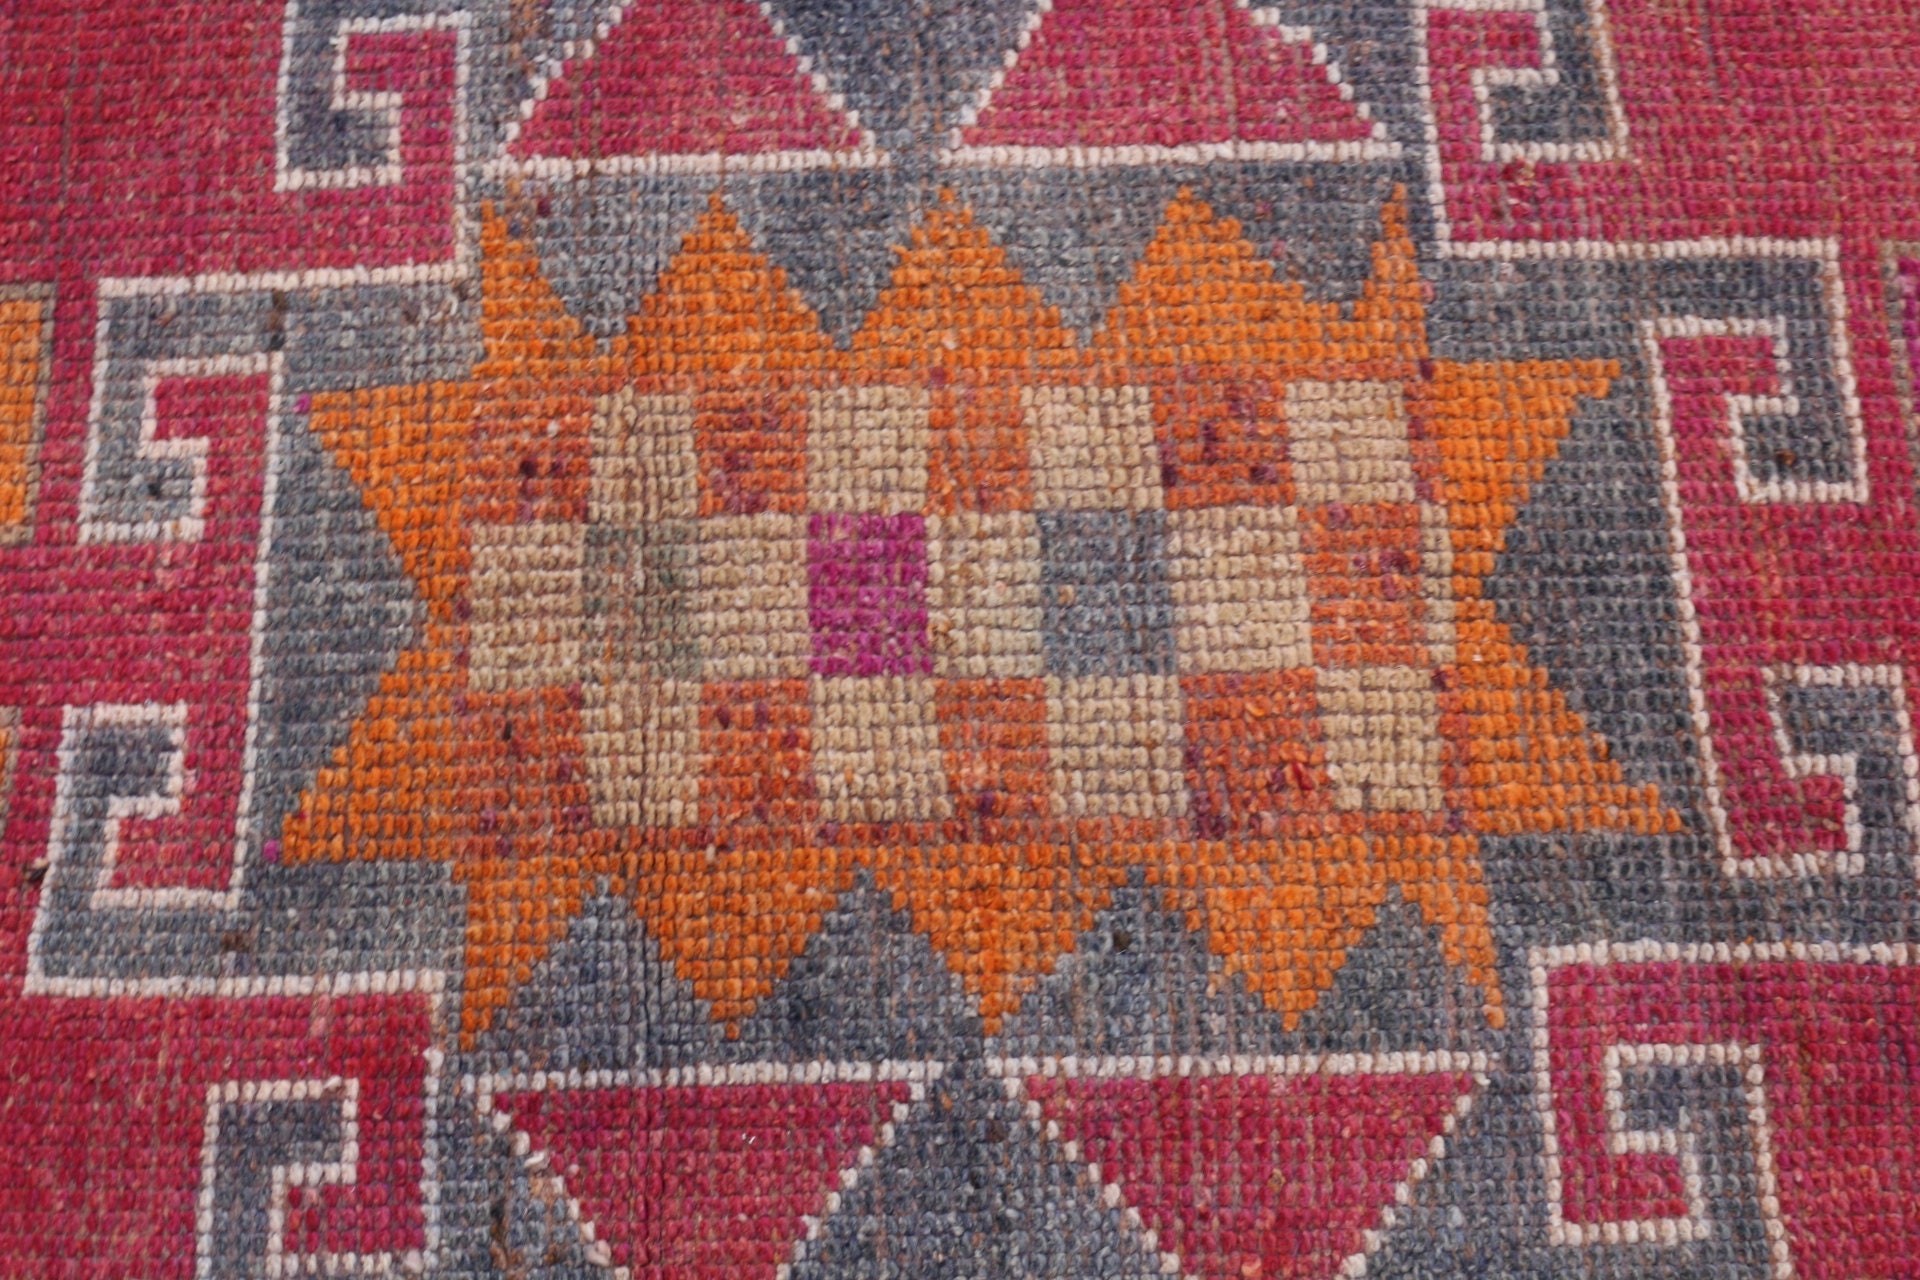 Moroccan Rugs, Rugs for Corridor, Turkish Rugs, Corridor Rugs, Anatolian Rugs, Vintage Rug, Orange Kitchen Rug, 2.7x10.2 ft Runner Rug